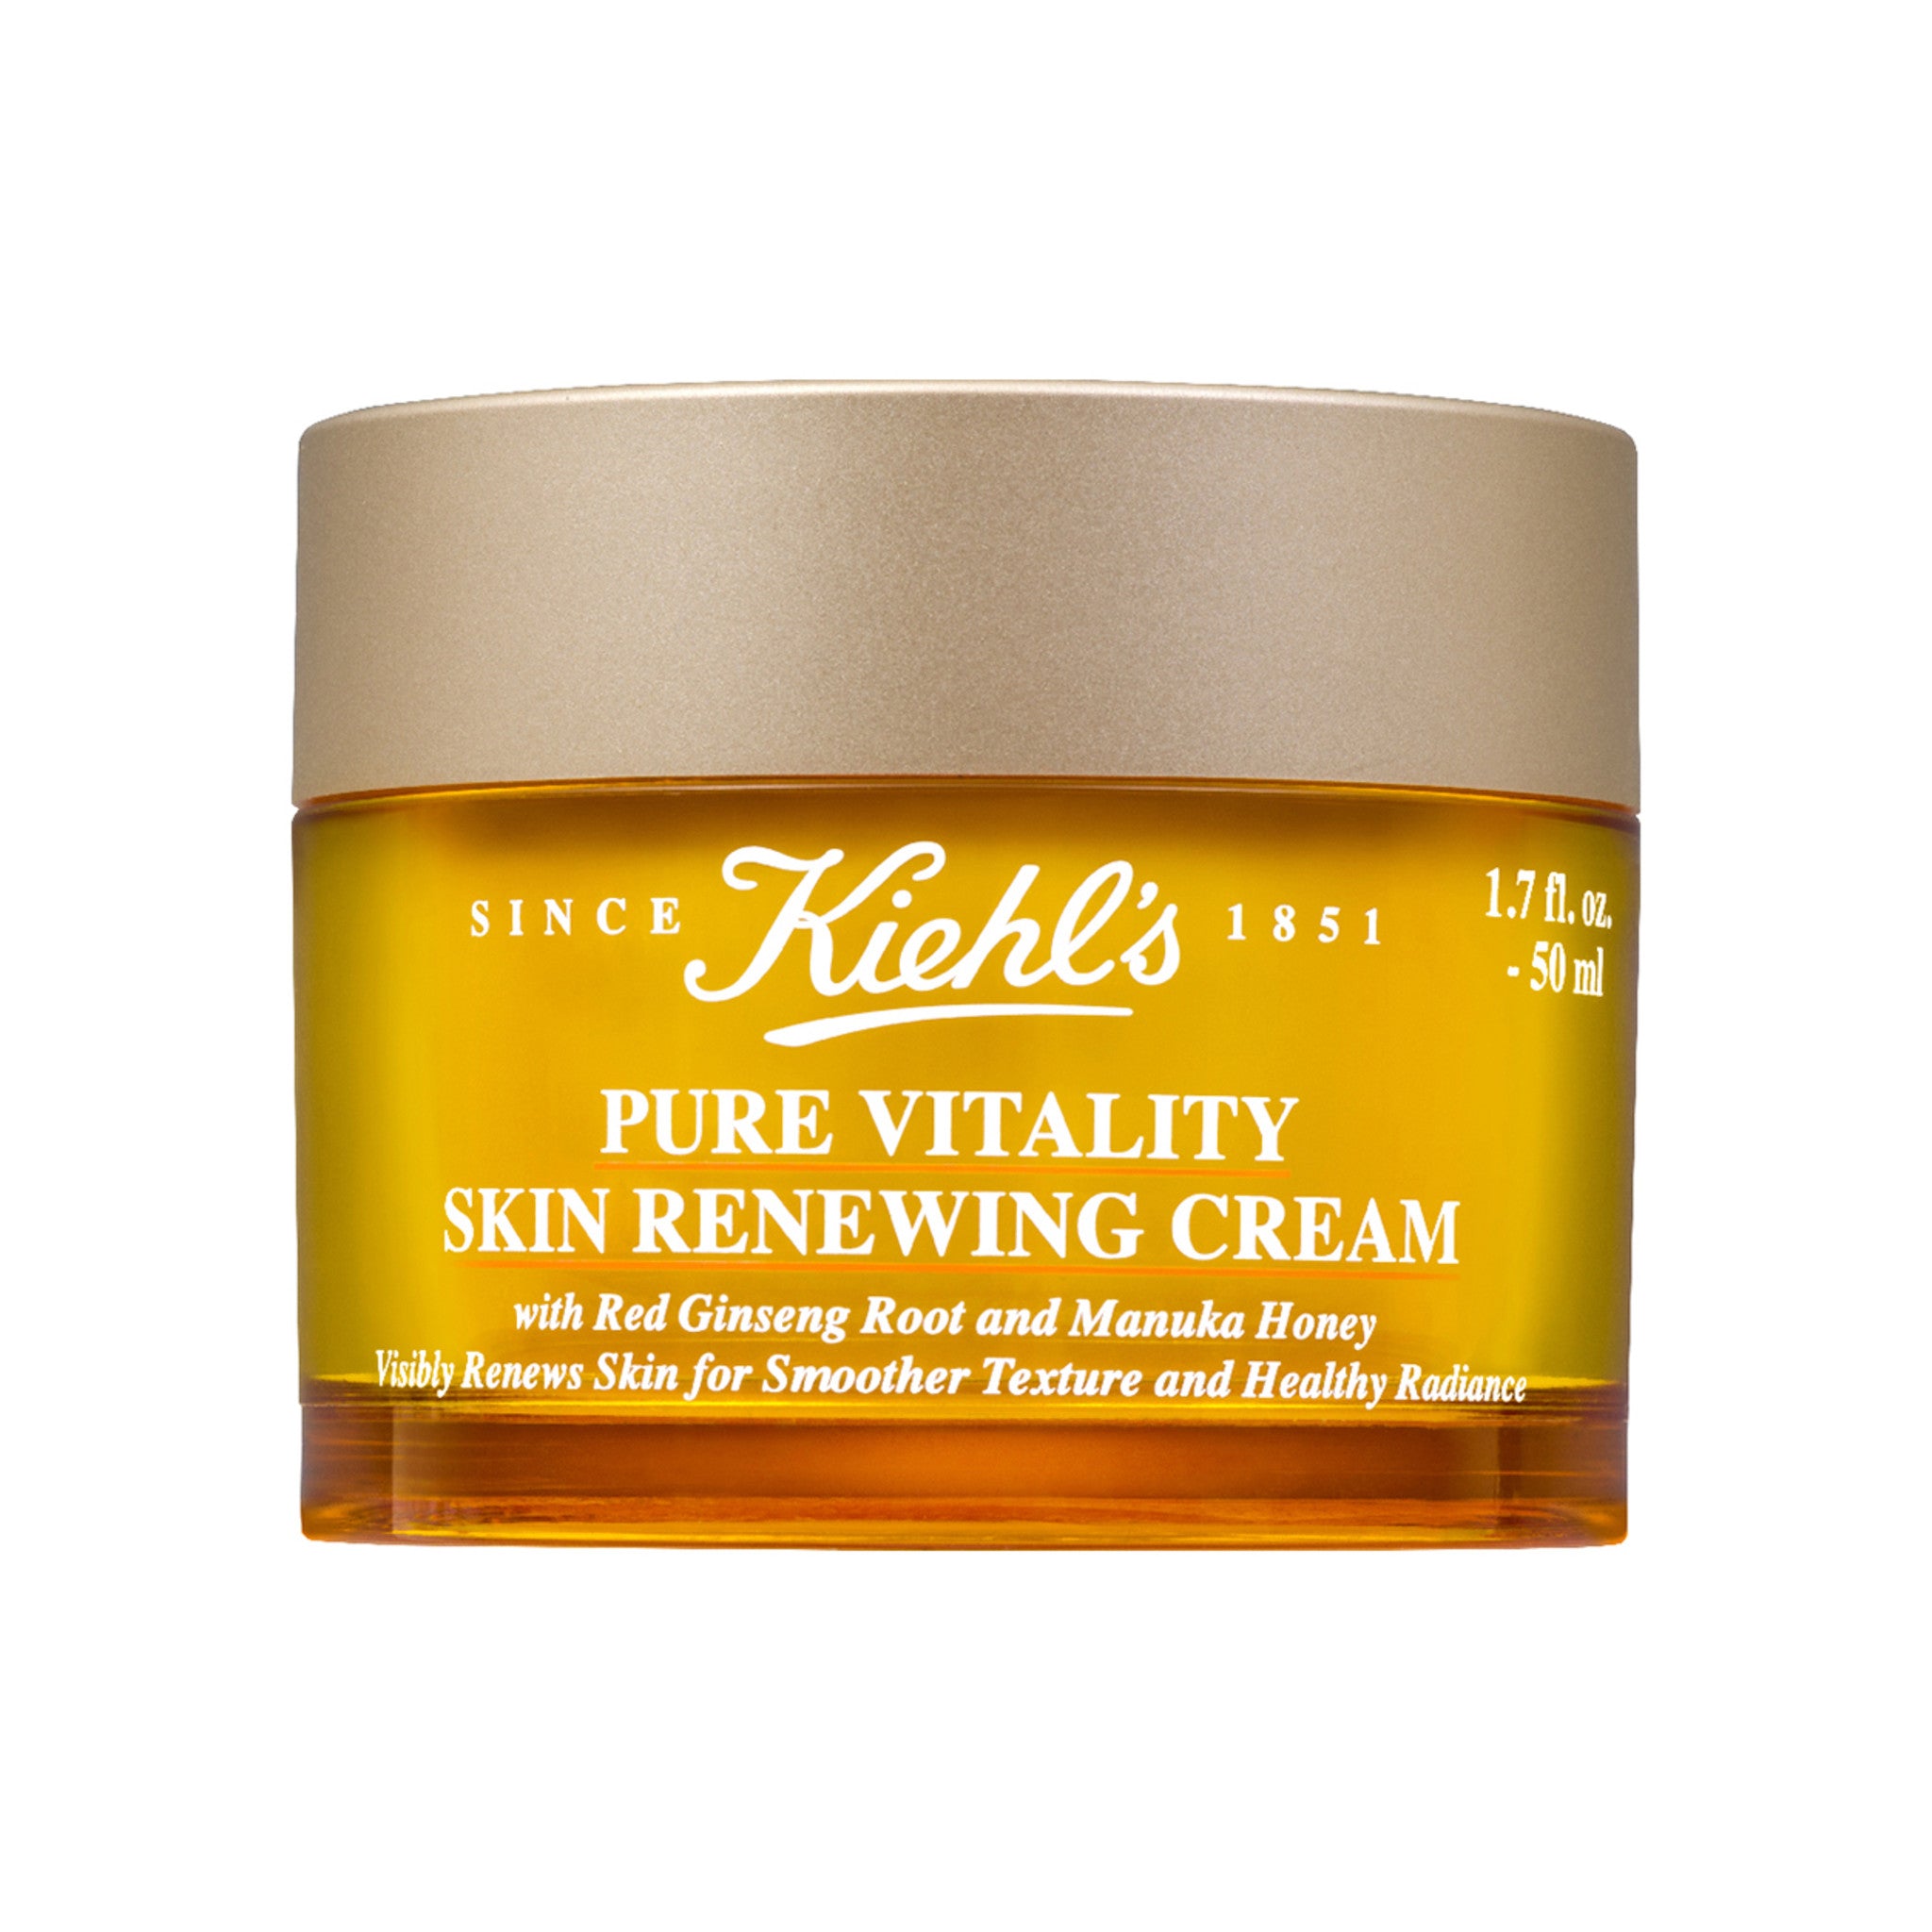 Kiehl's Since 1851 Pure Vitality Skin Renewing Cream main image.